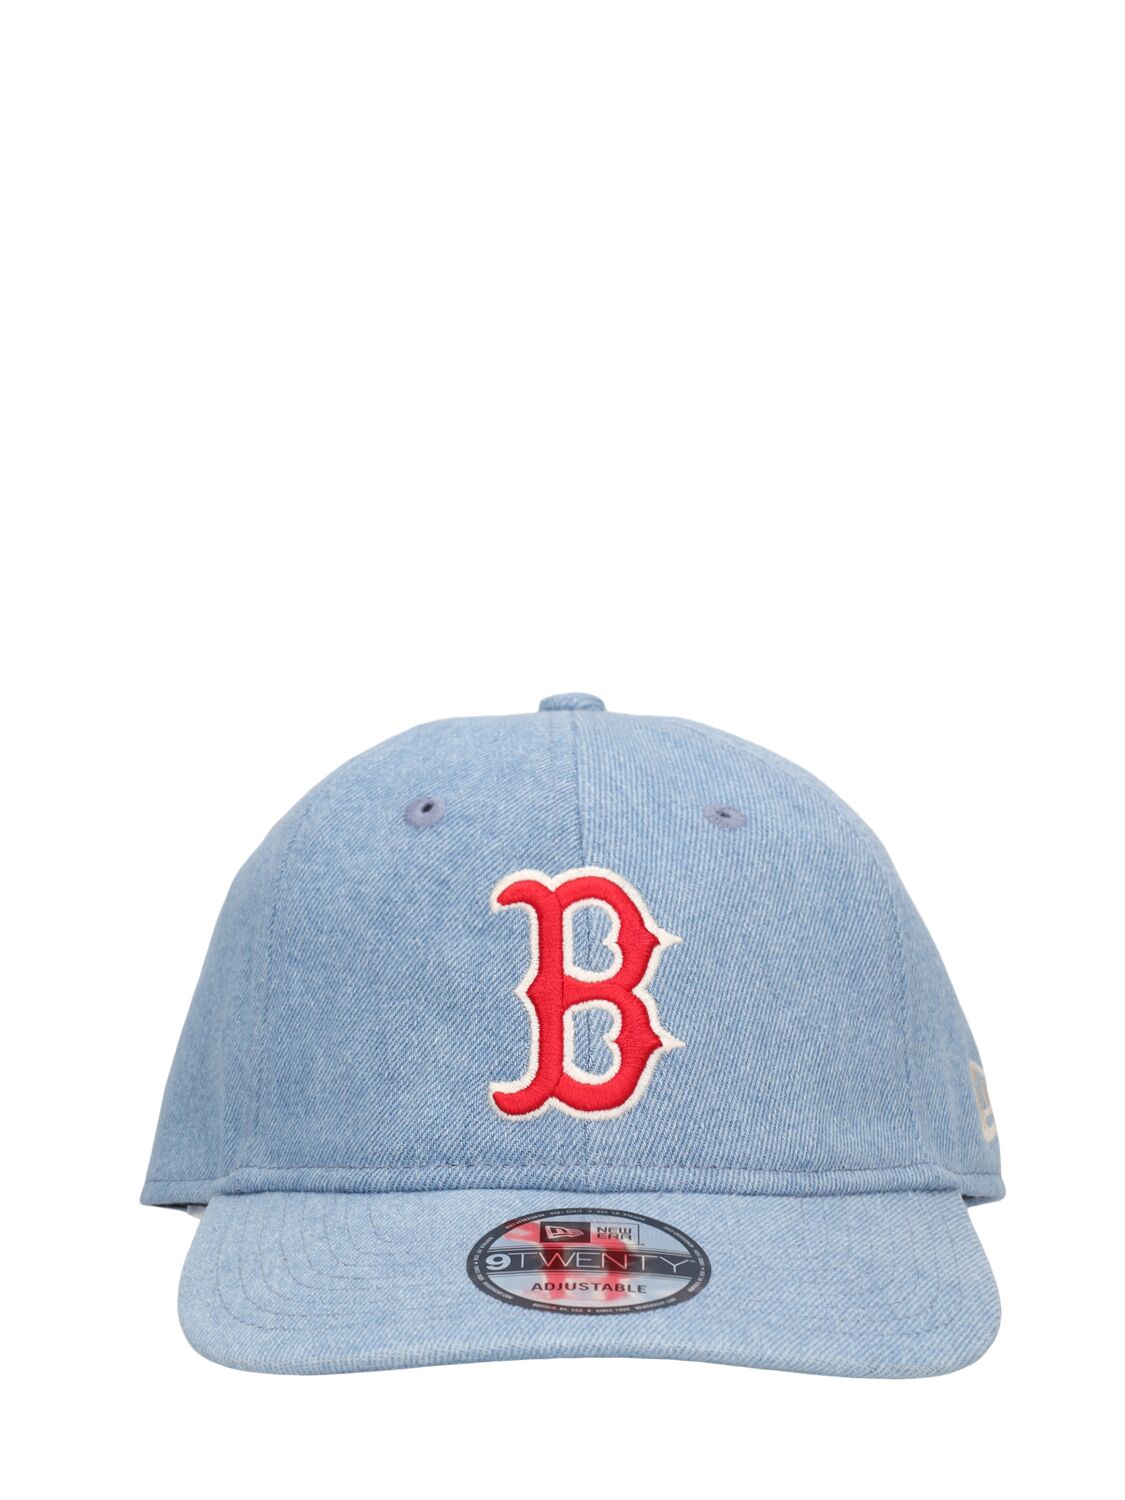 New Era Washed Denim Boston Red Sox棒球帽 In Washed Denim